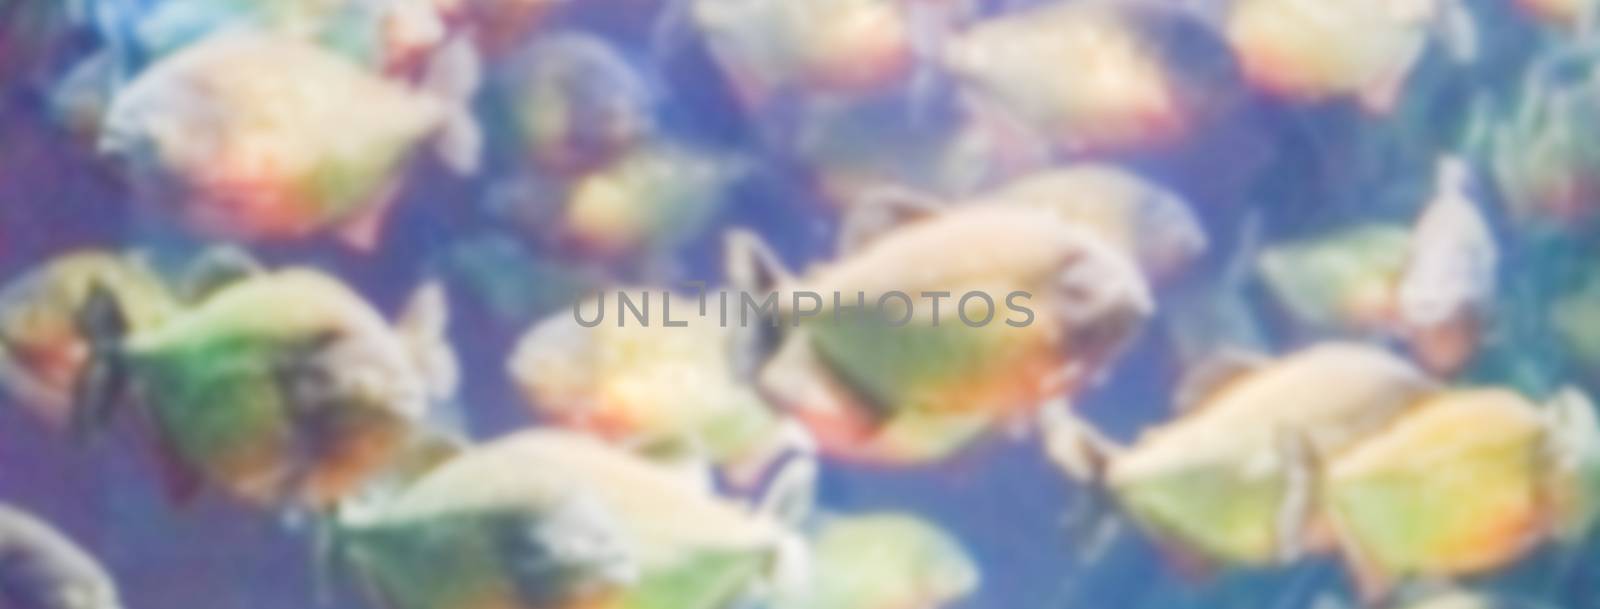 Defocused background with a flock of piranhas by marcorubino